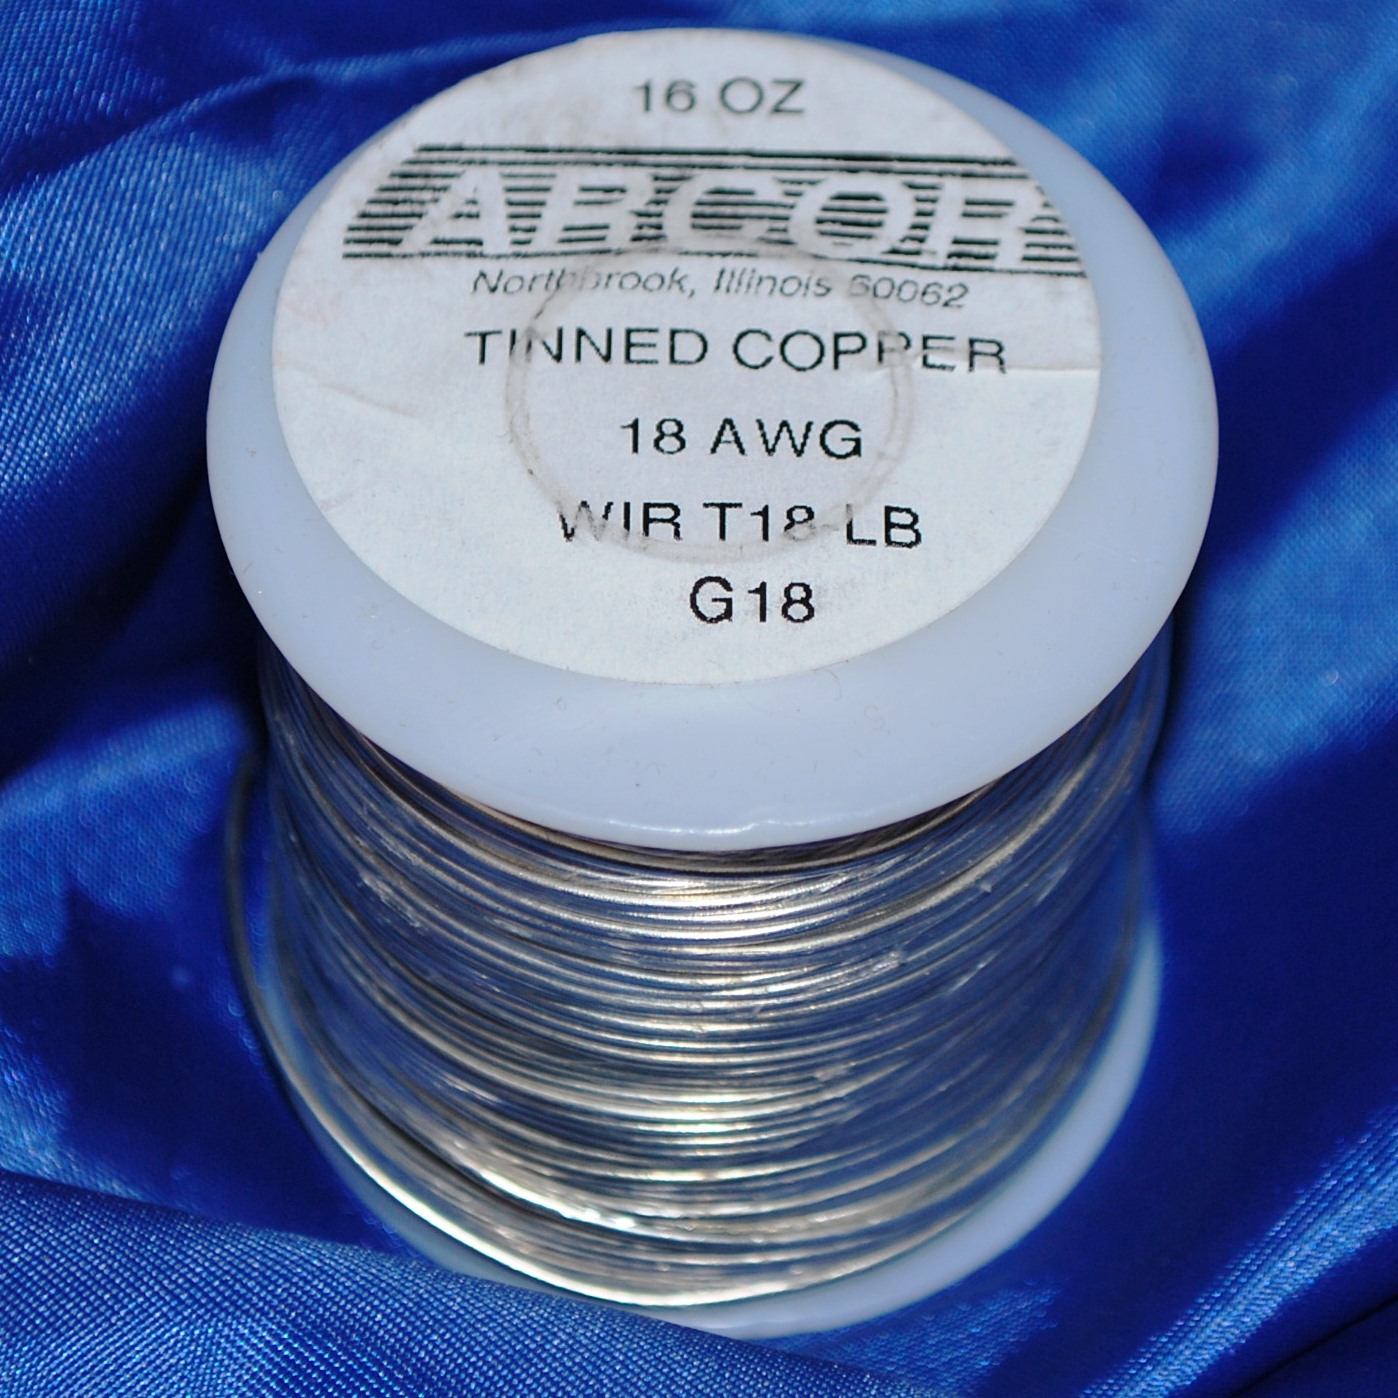 15650-Tinned Copper Wire 16 Gauge 4 oz.